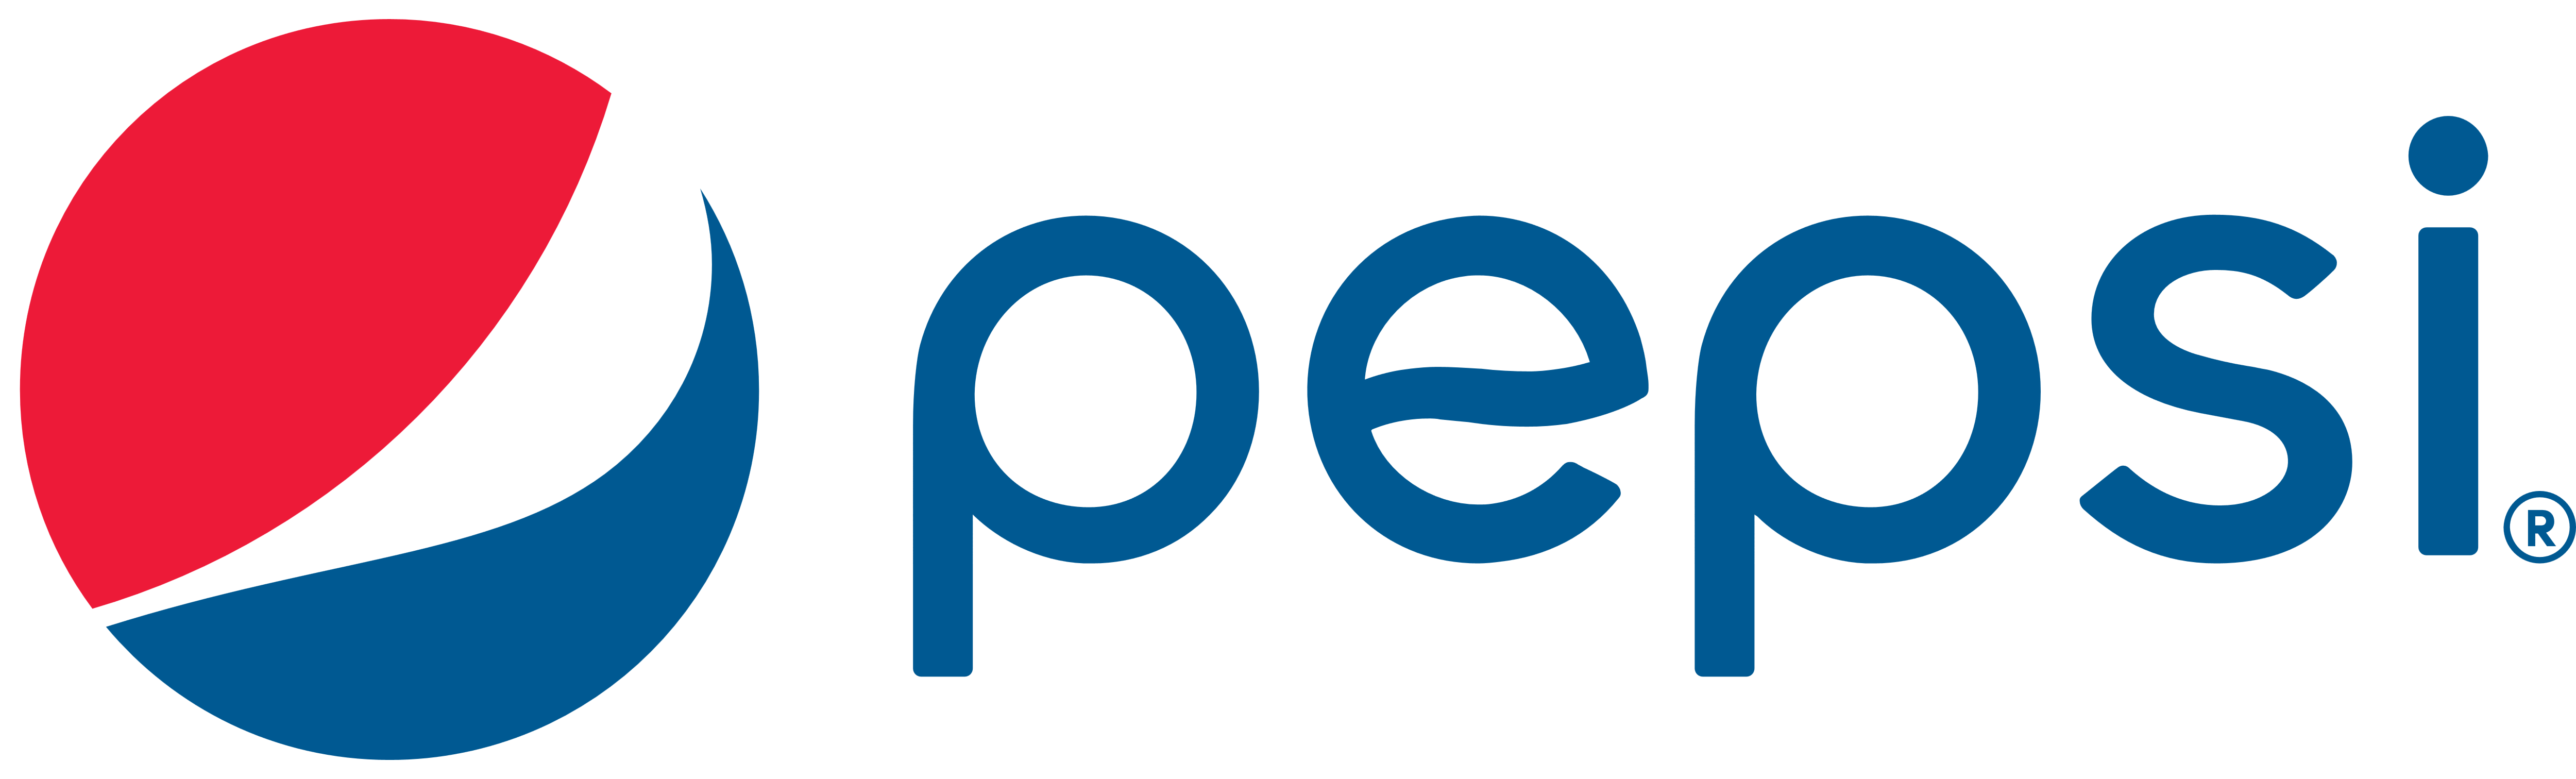 Pepsi Product Logo - Pepsi Program & Product Support | STUDENT AFFAIRS